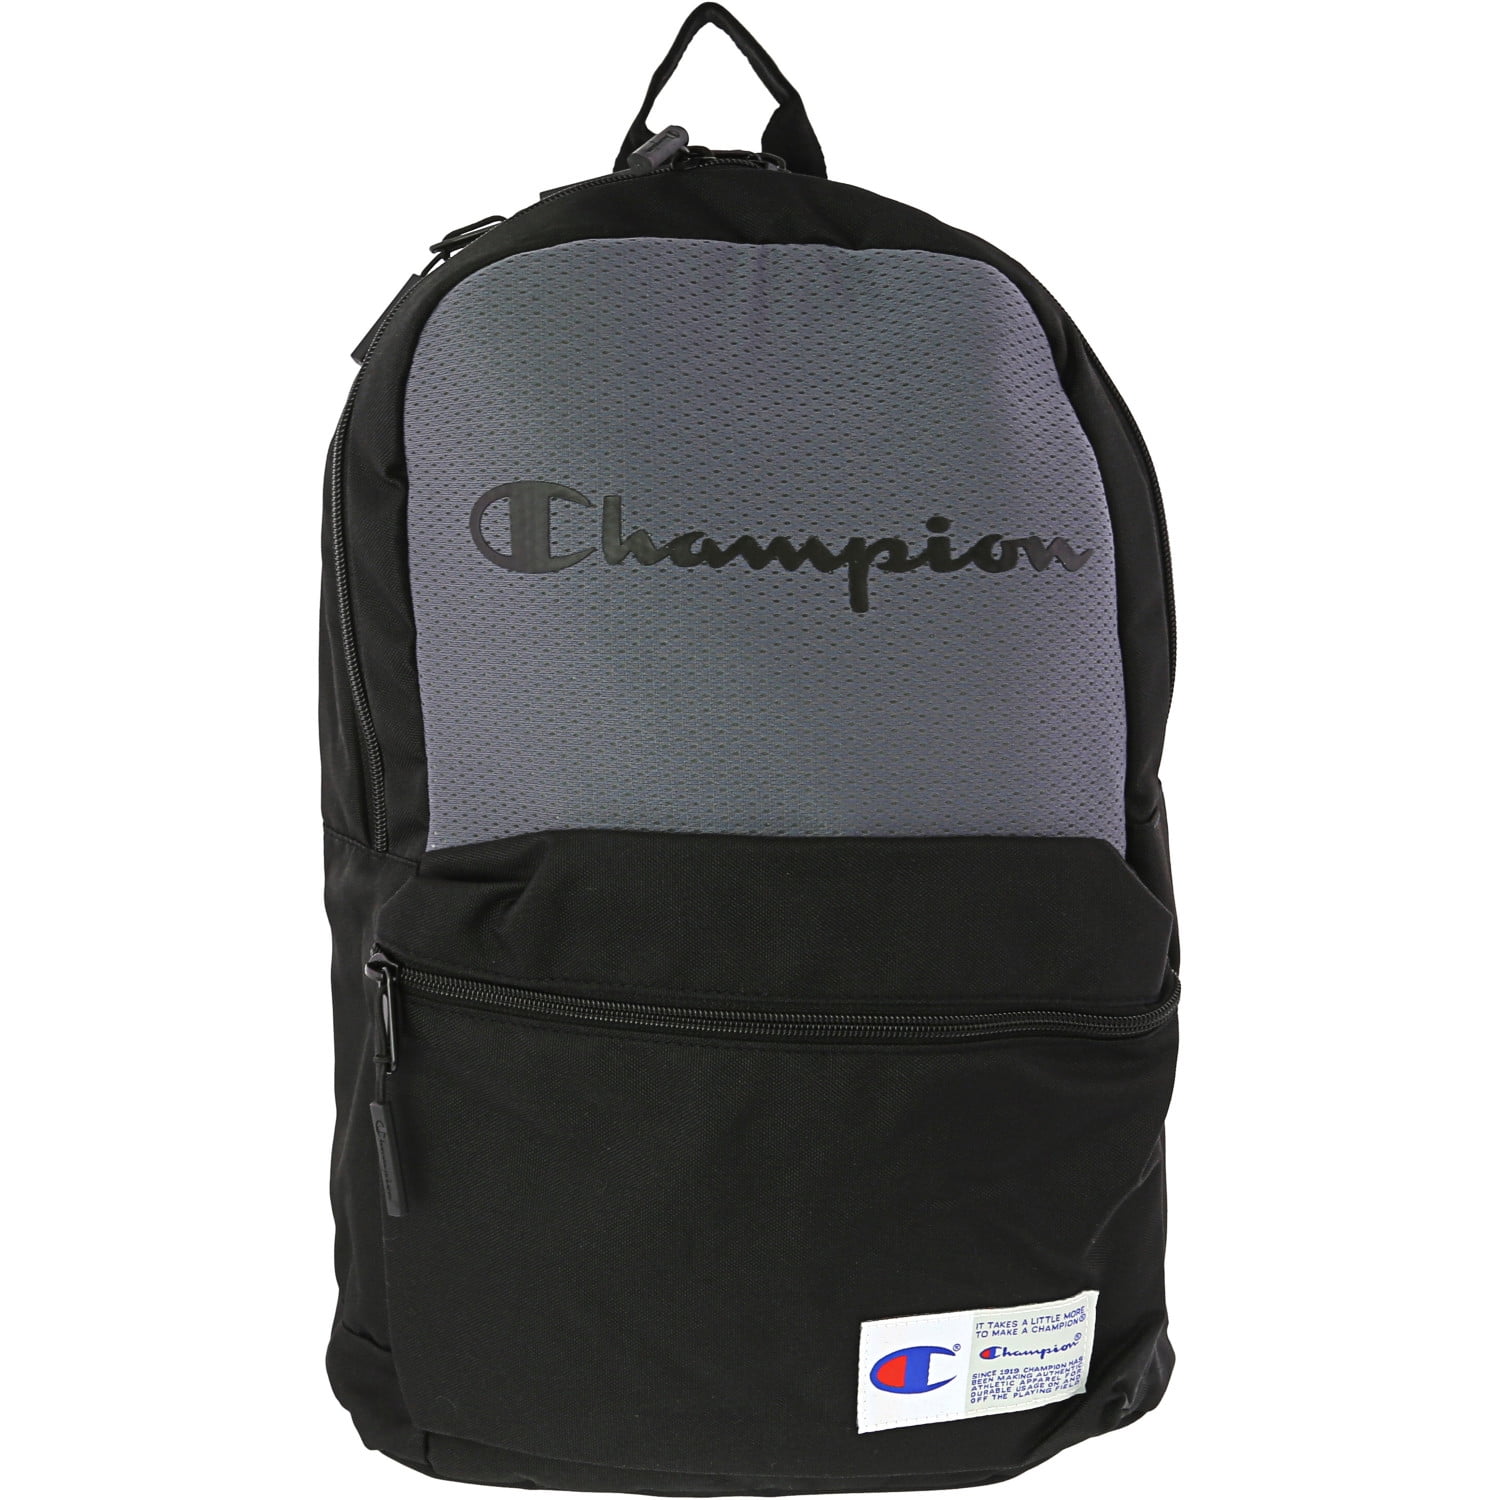 mesh champion backpack